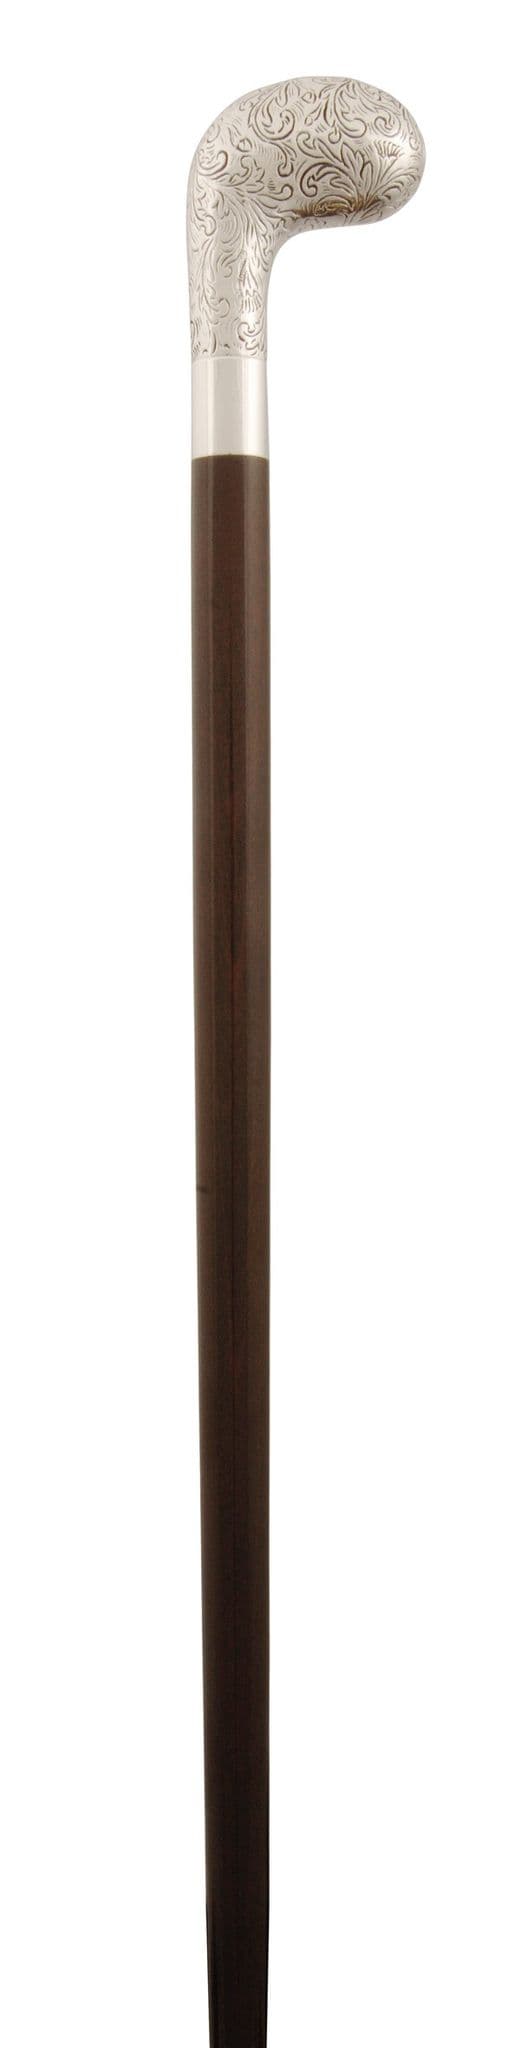 Classic Canes Pistol grip formal cane, R925 silver, brown hardwood shaft